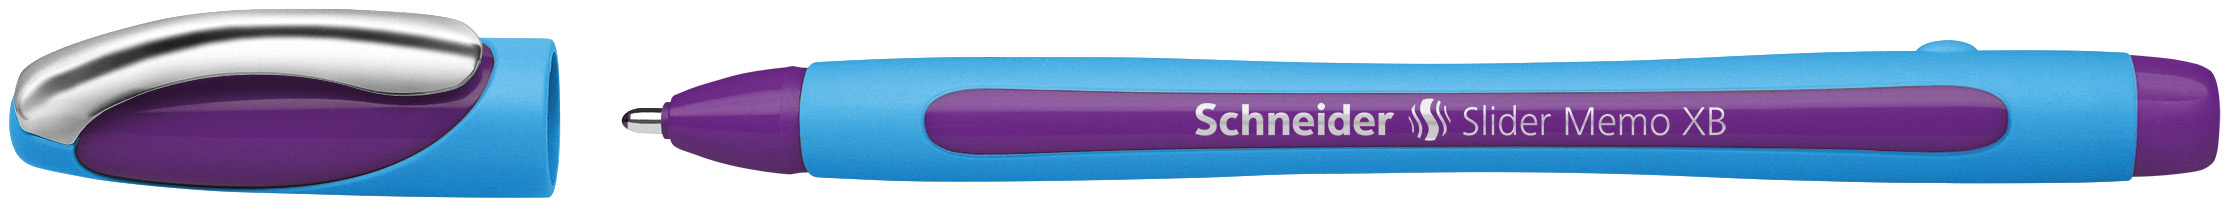 SCHNEIDER Stylo Slider Memo XB 0.7mm 150208 violet